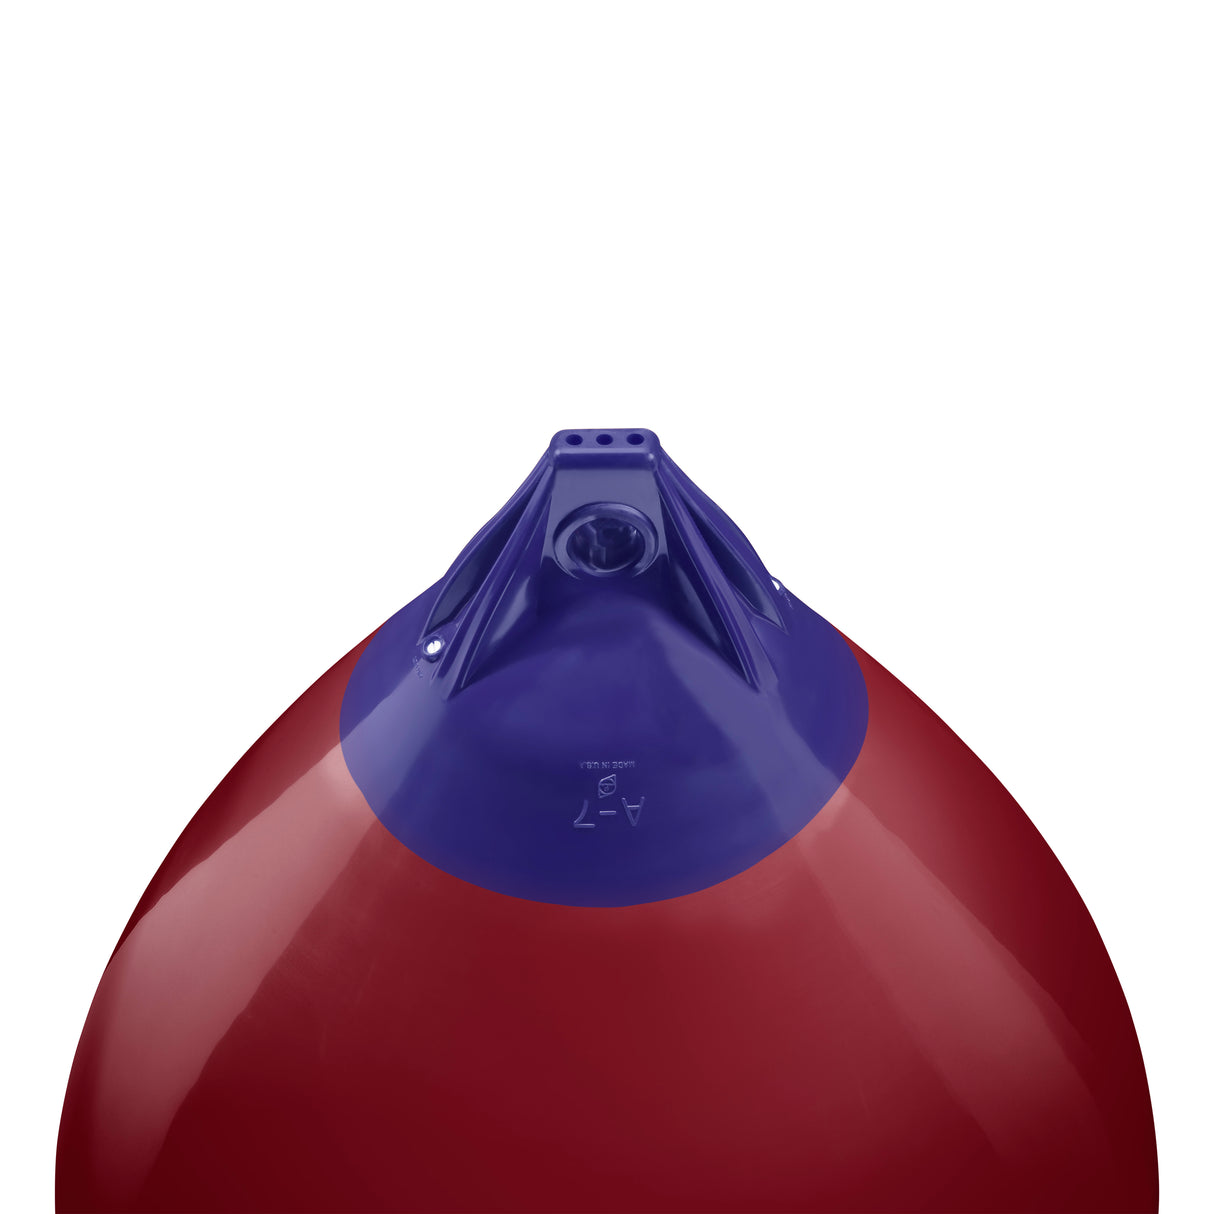 Burgundy inflatable buoy, Polyform A-7 angled shot